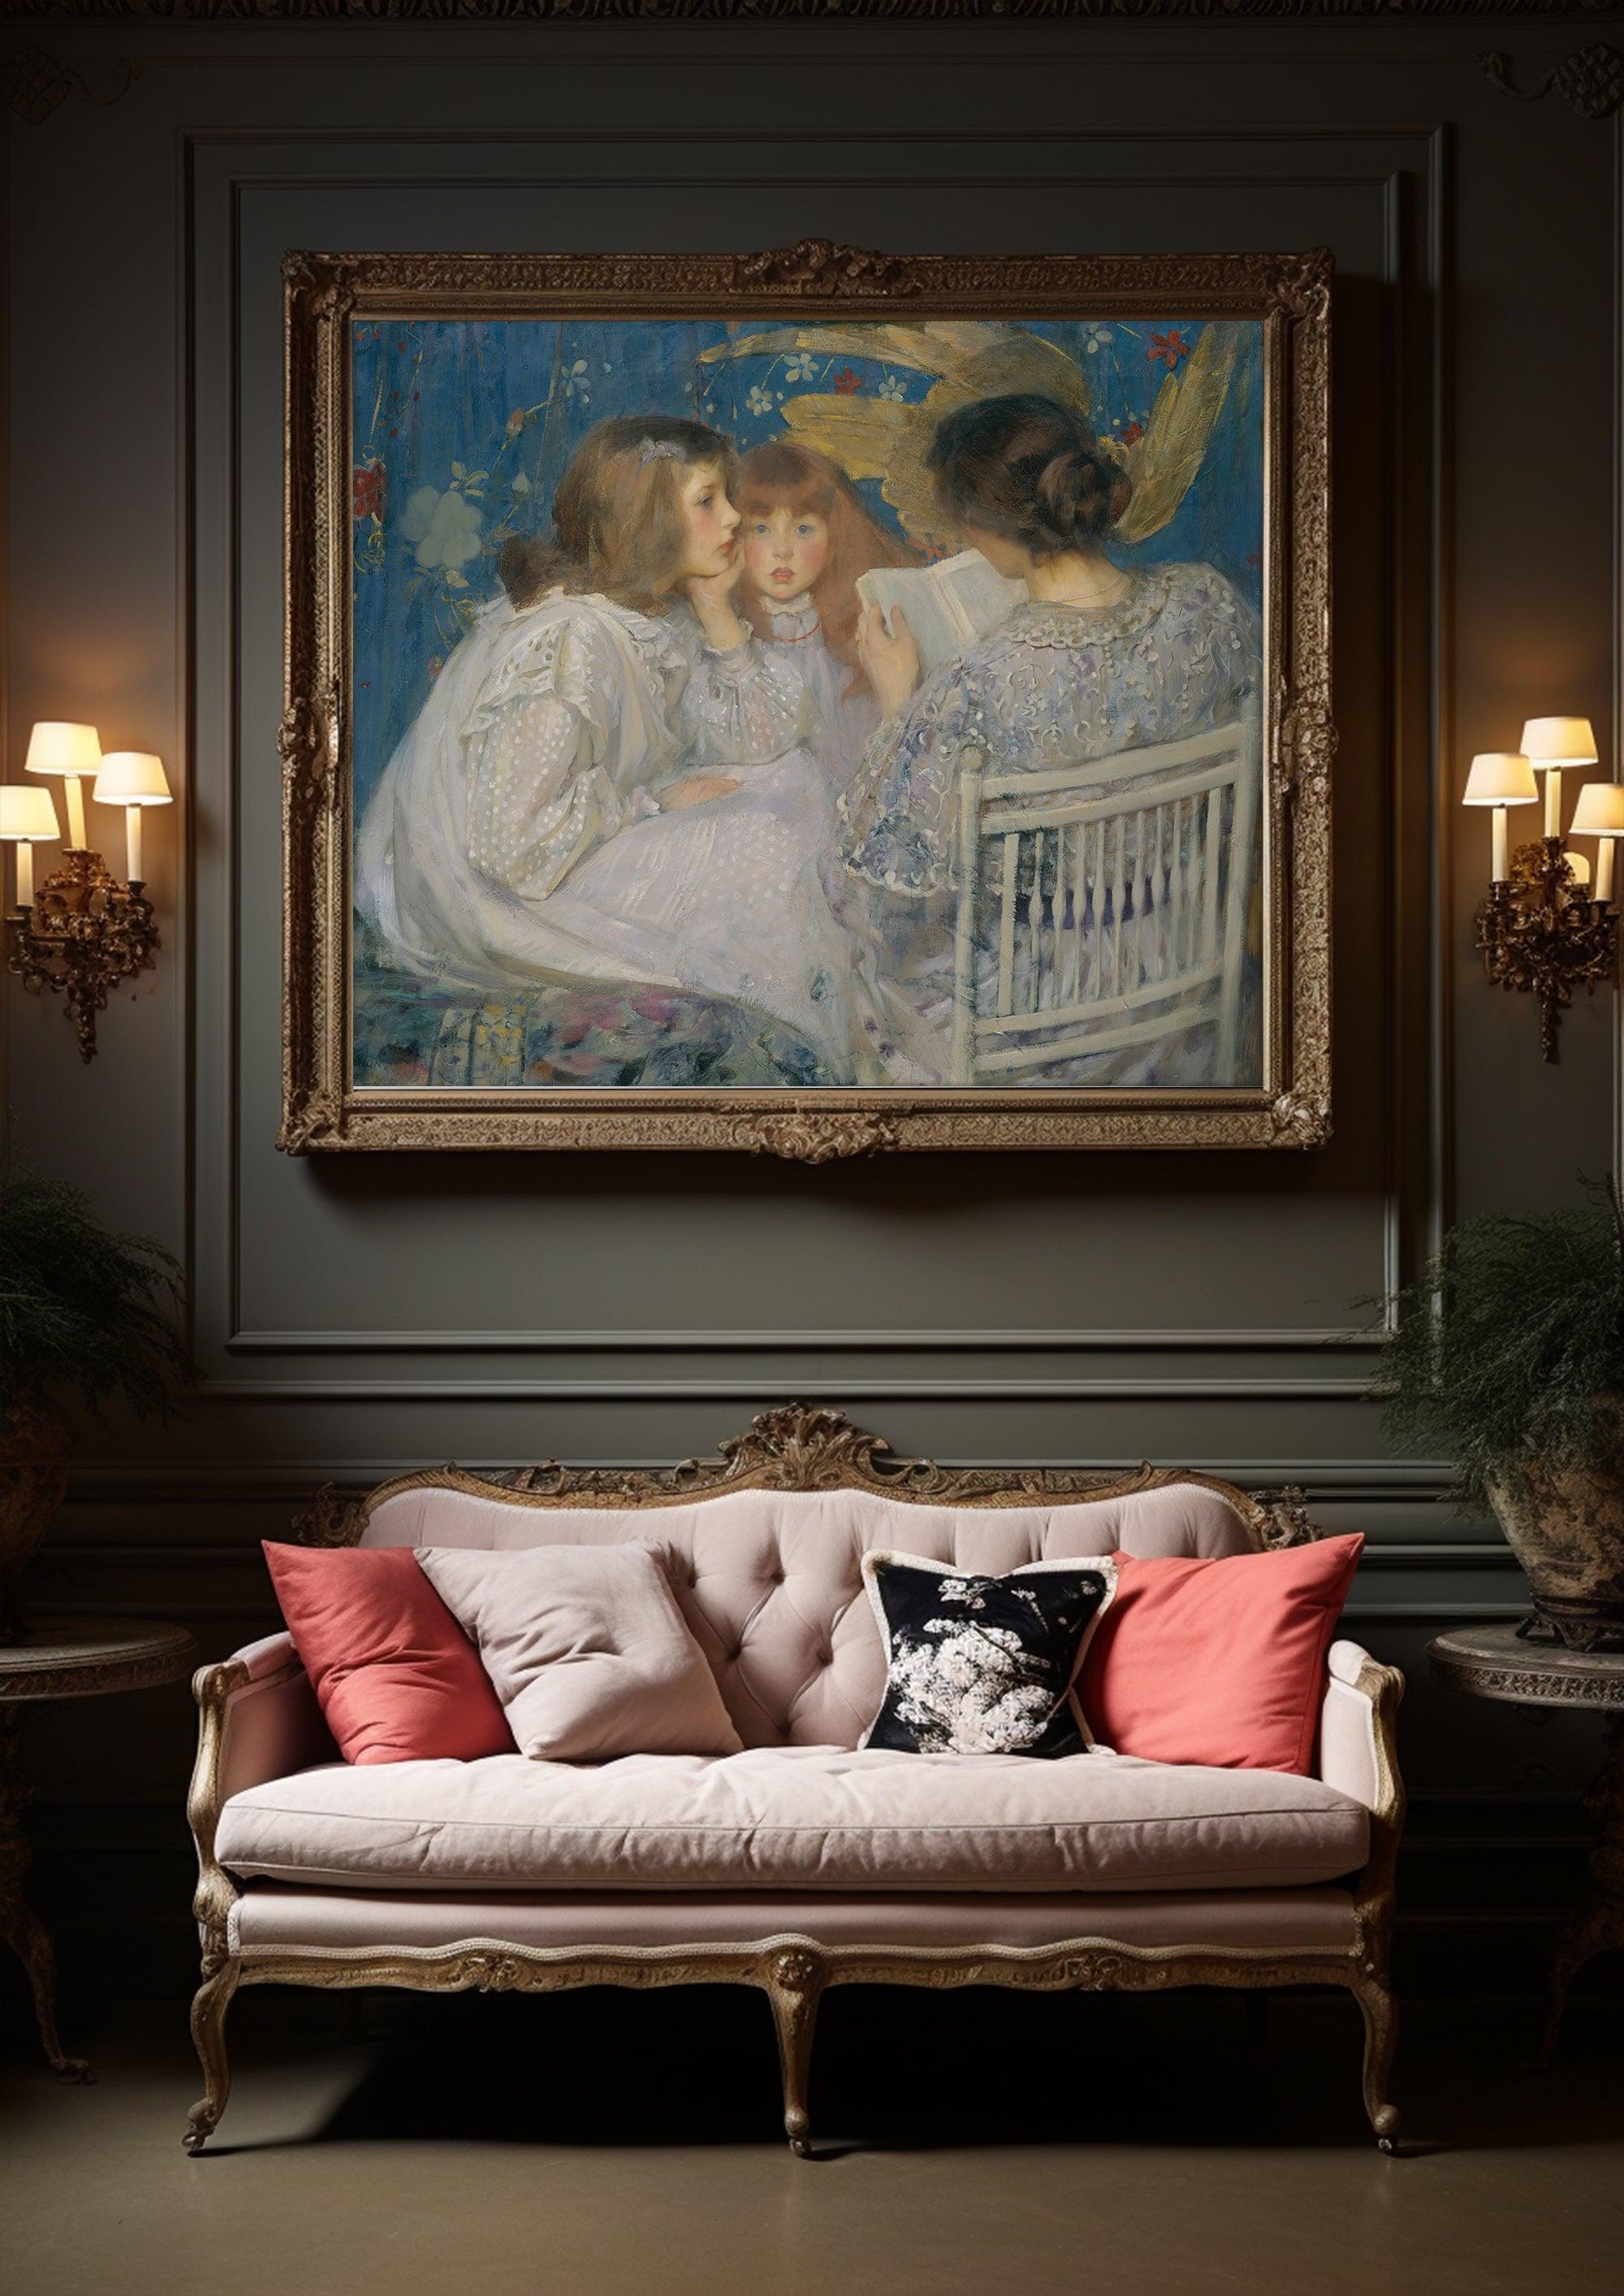 Romanticism,Wall Art,Canvas Print,Framed RC 7 - ParfaiteArt